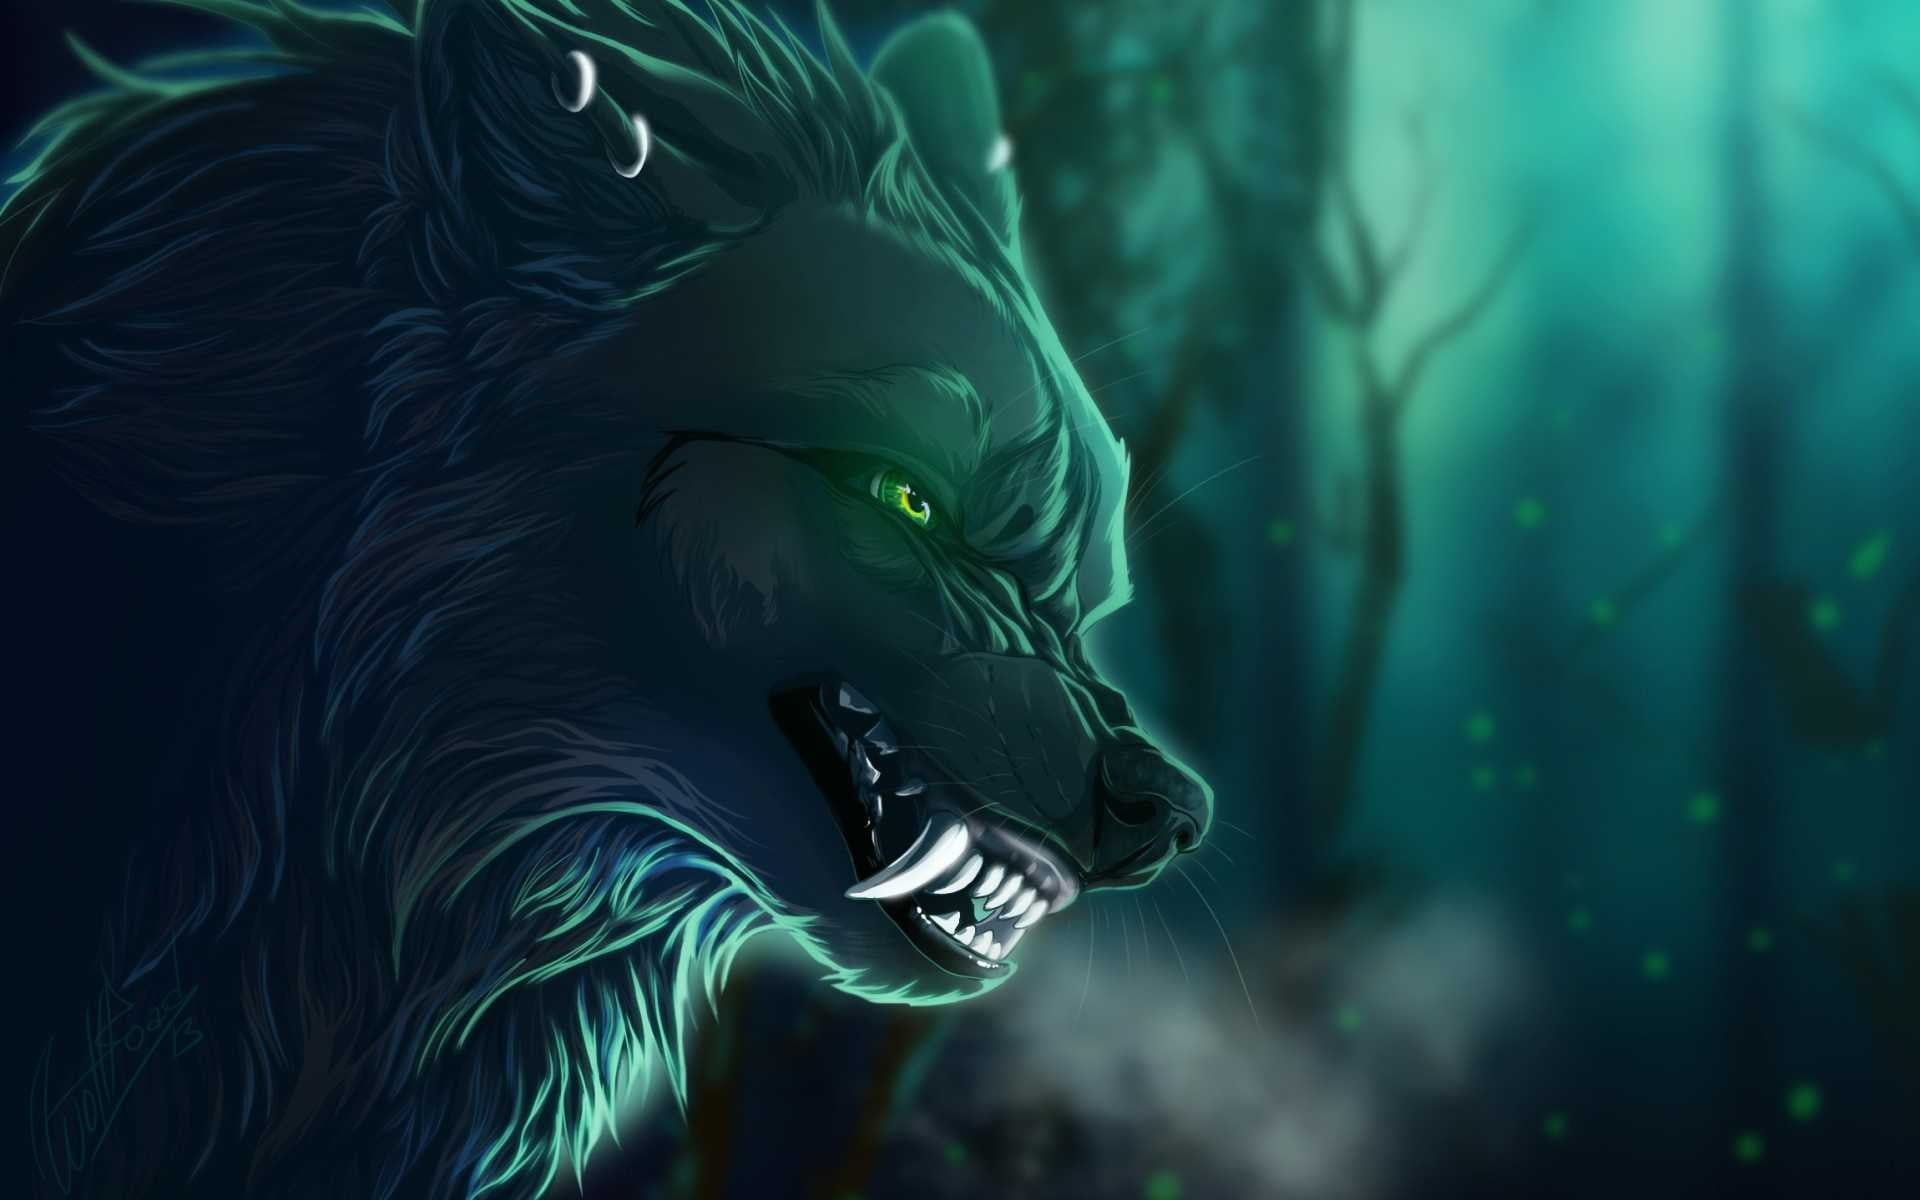 gray wolf wallpaper, artwork, creature, green eyes, teeth, fantasy art